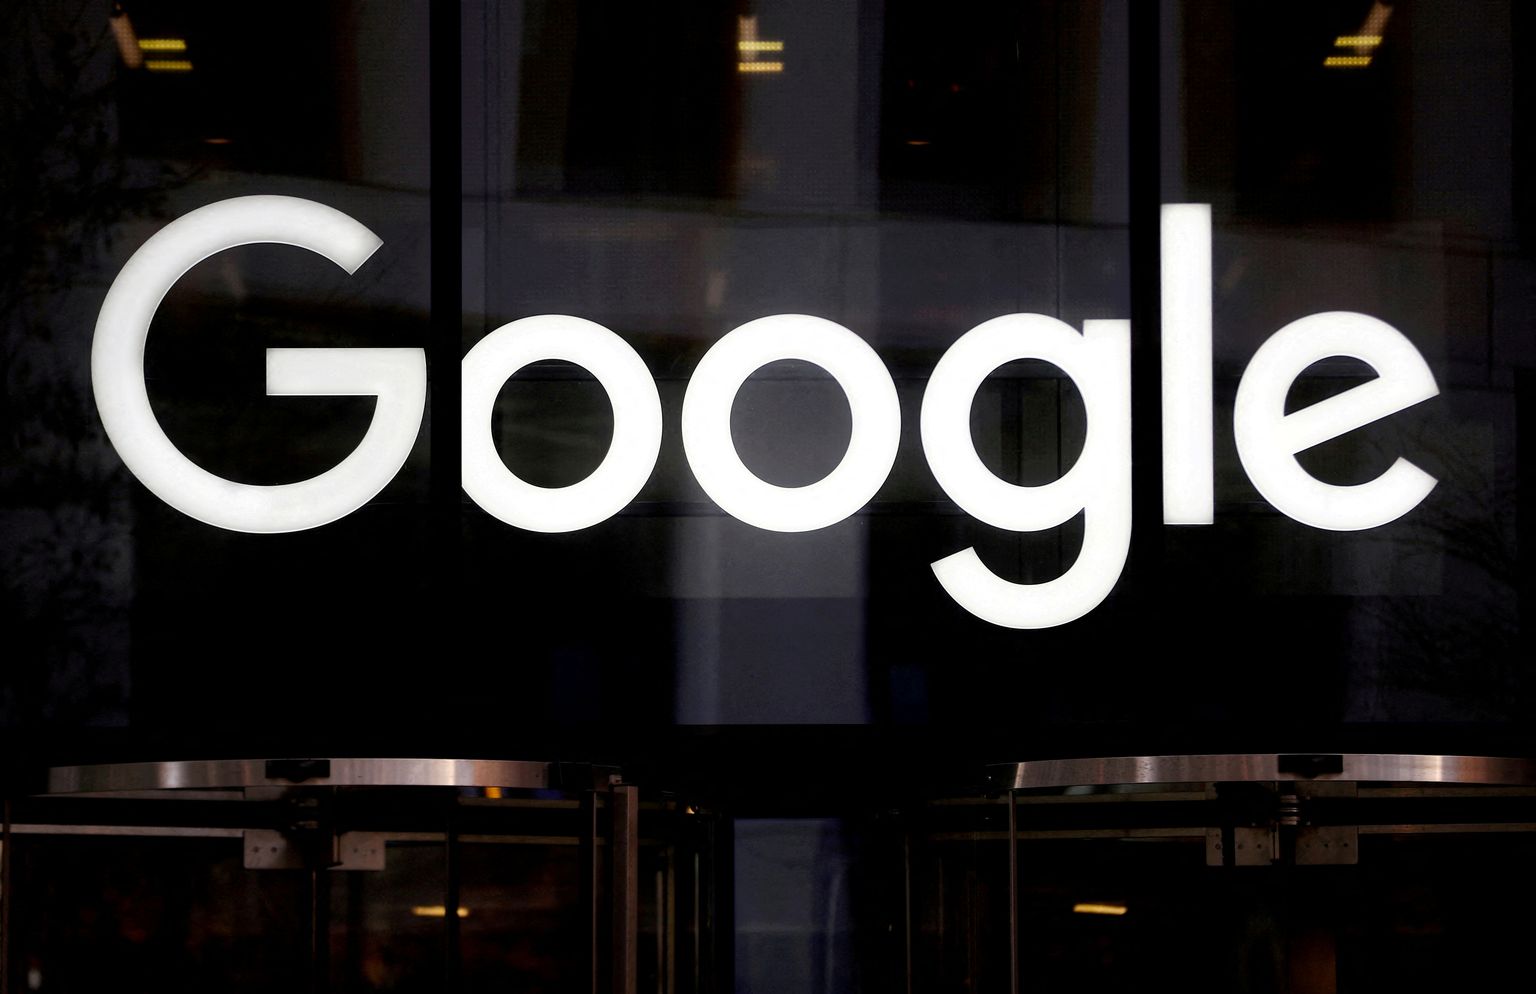 Google'i logo.